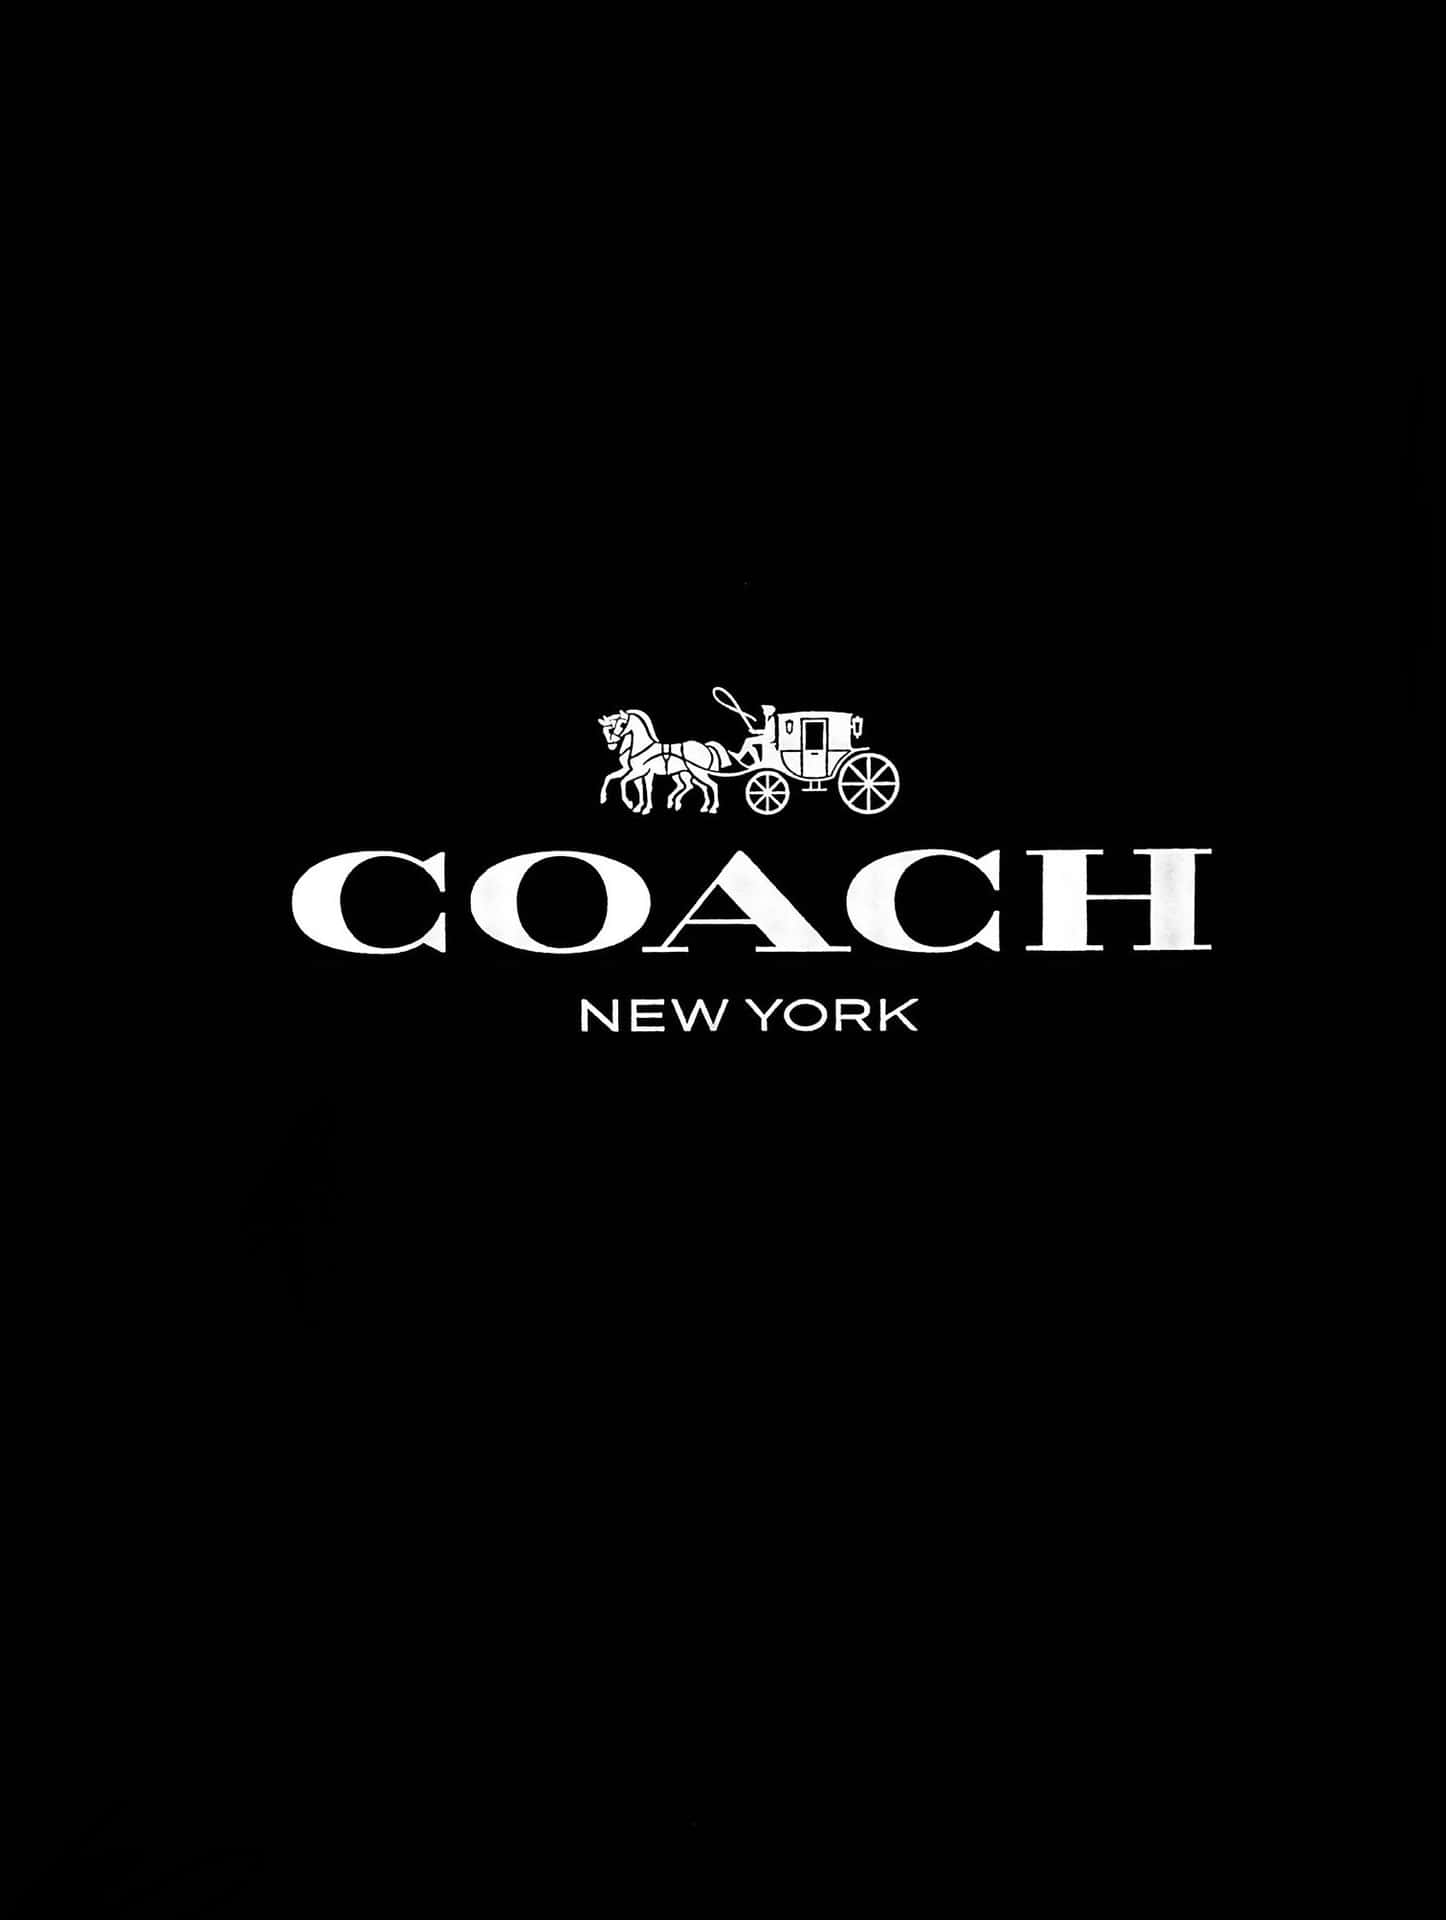 Coach New York Logo On A Black Background